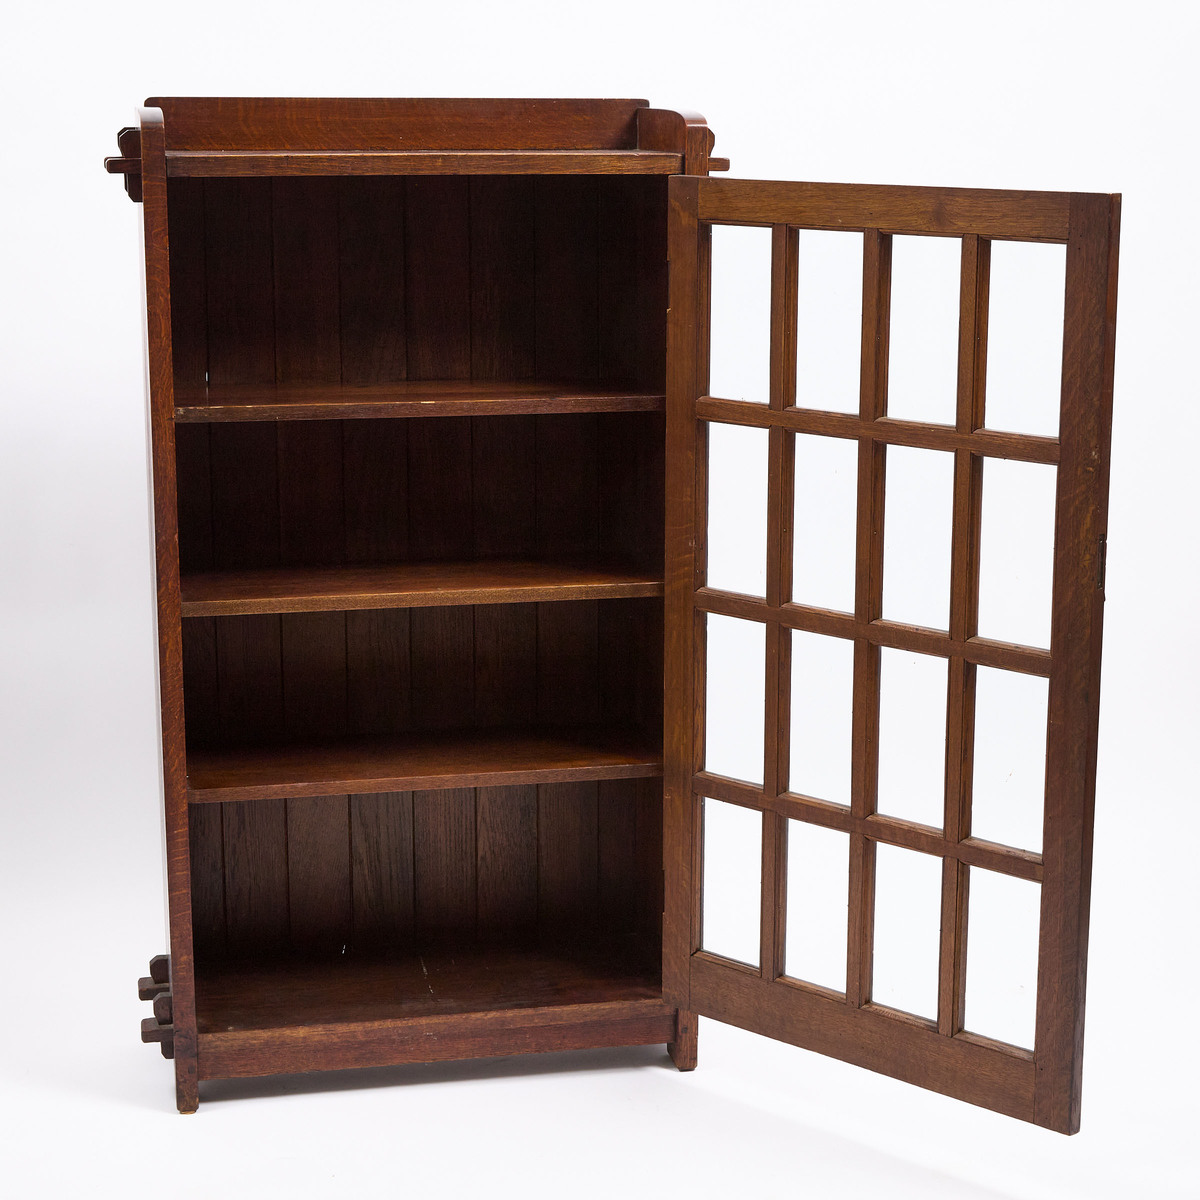 L. & J. G. Stickley Model 641 Single Door Oak Bookcase, c.1905, 55.25 x 33 x 12 in — 140.3 x 83.8 x - Image 2 of 2